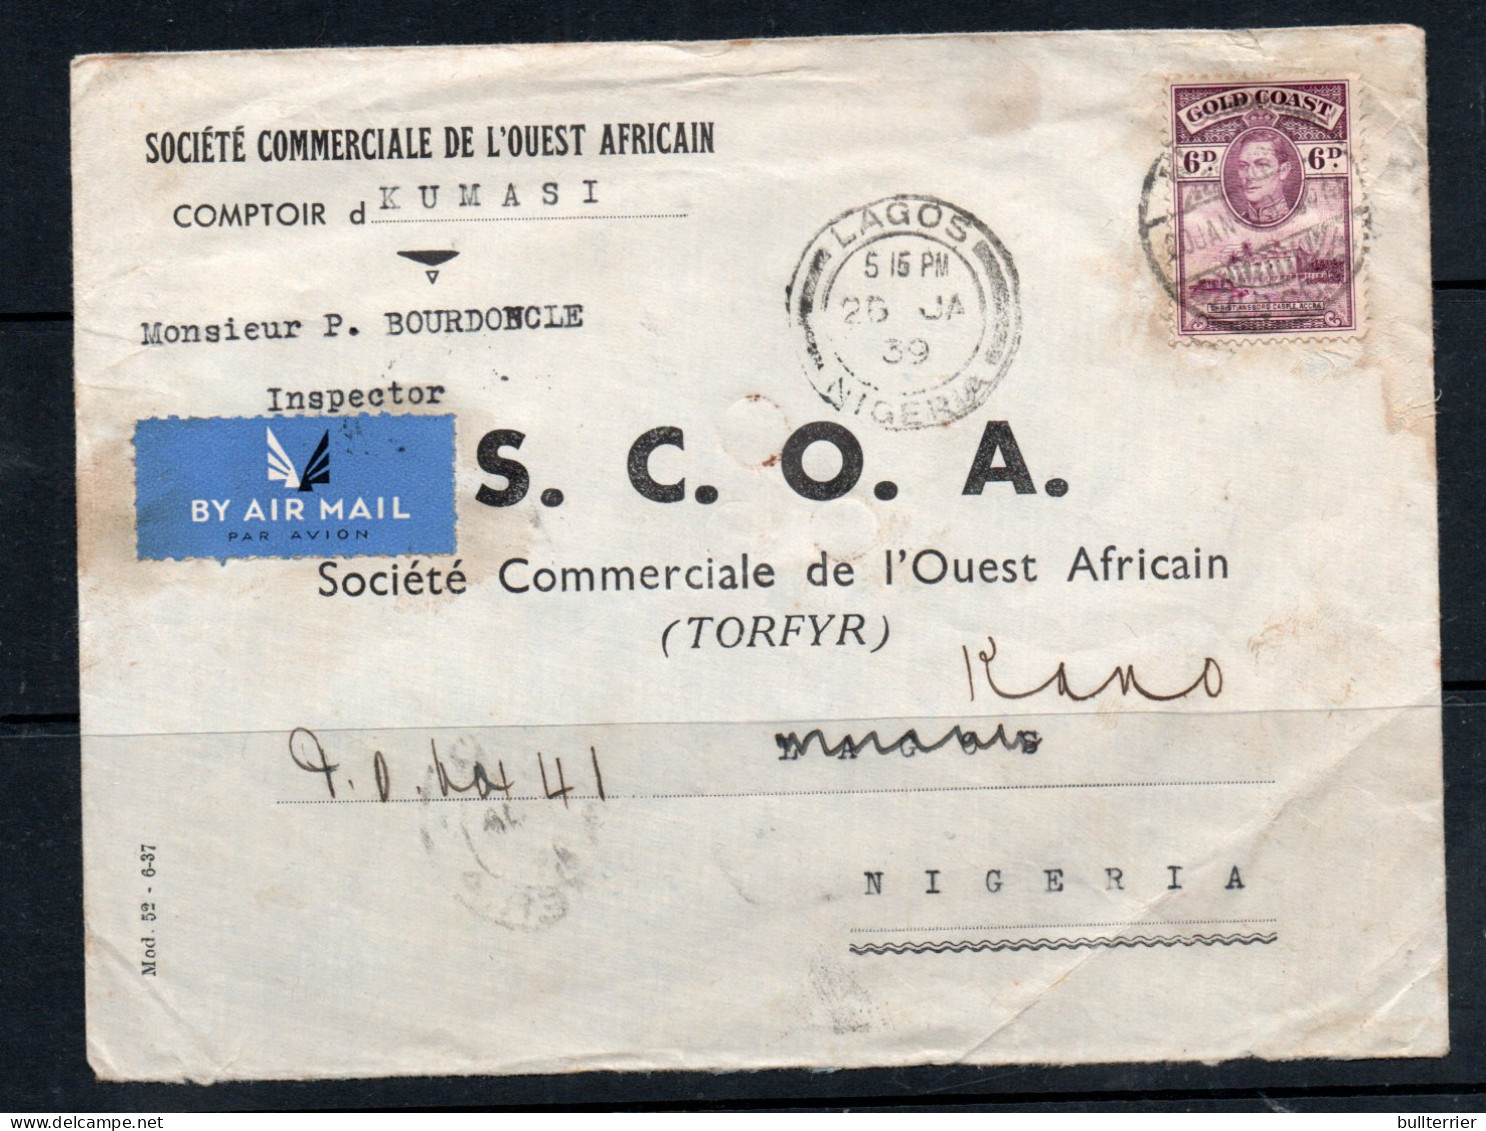 GOLD COAST - 1939- IMPERIAL AIRWAYS  TO NIGERIA WITH KANO  BACKSTAMP - Goudkust (...-1957)